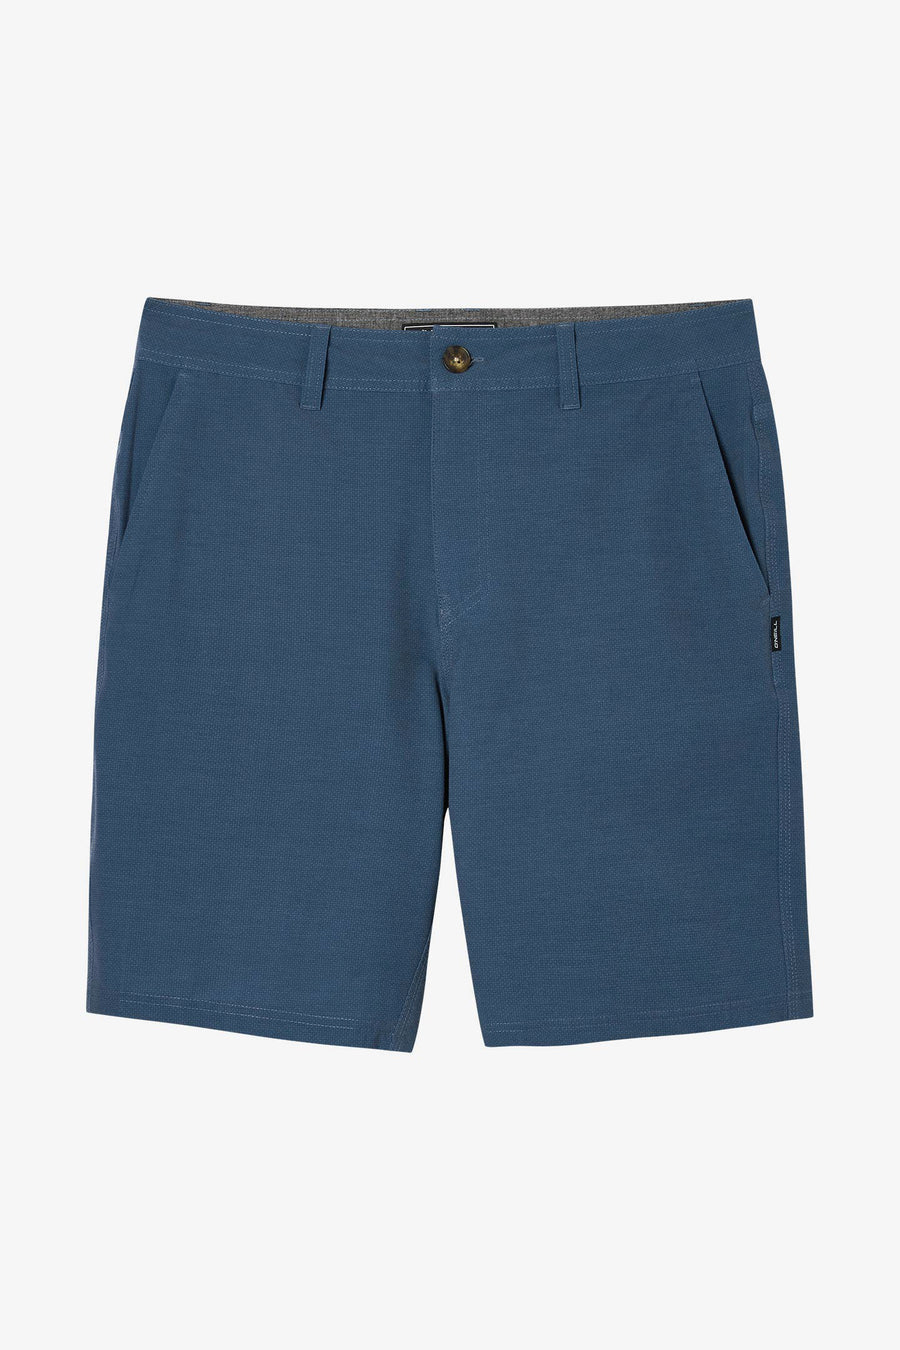 Stockton Print 20" Hybrid Shorts - Cadet Blue